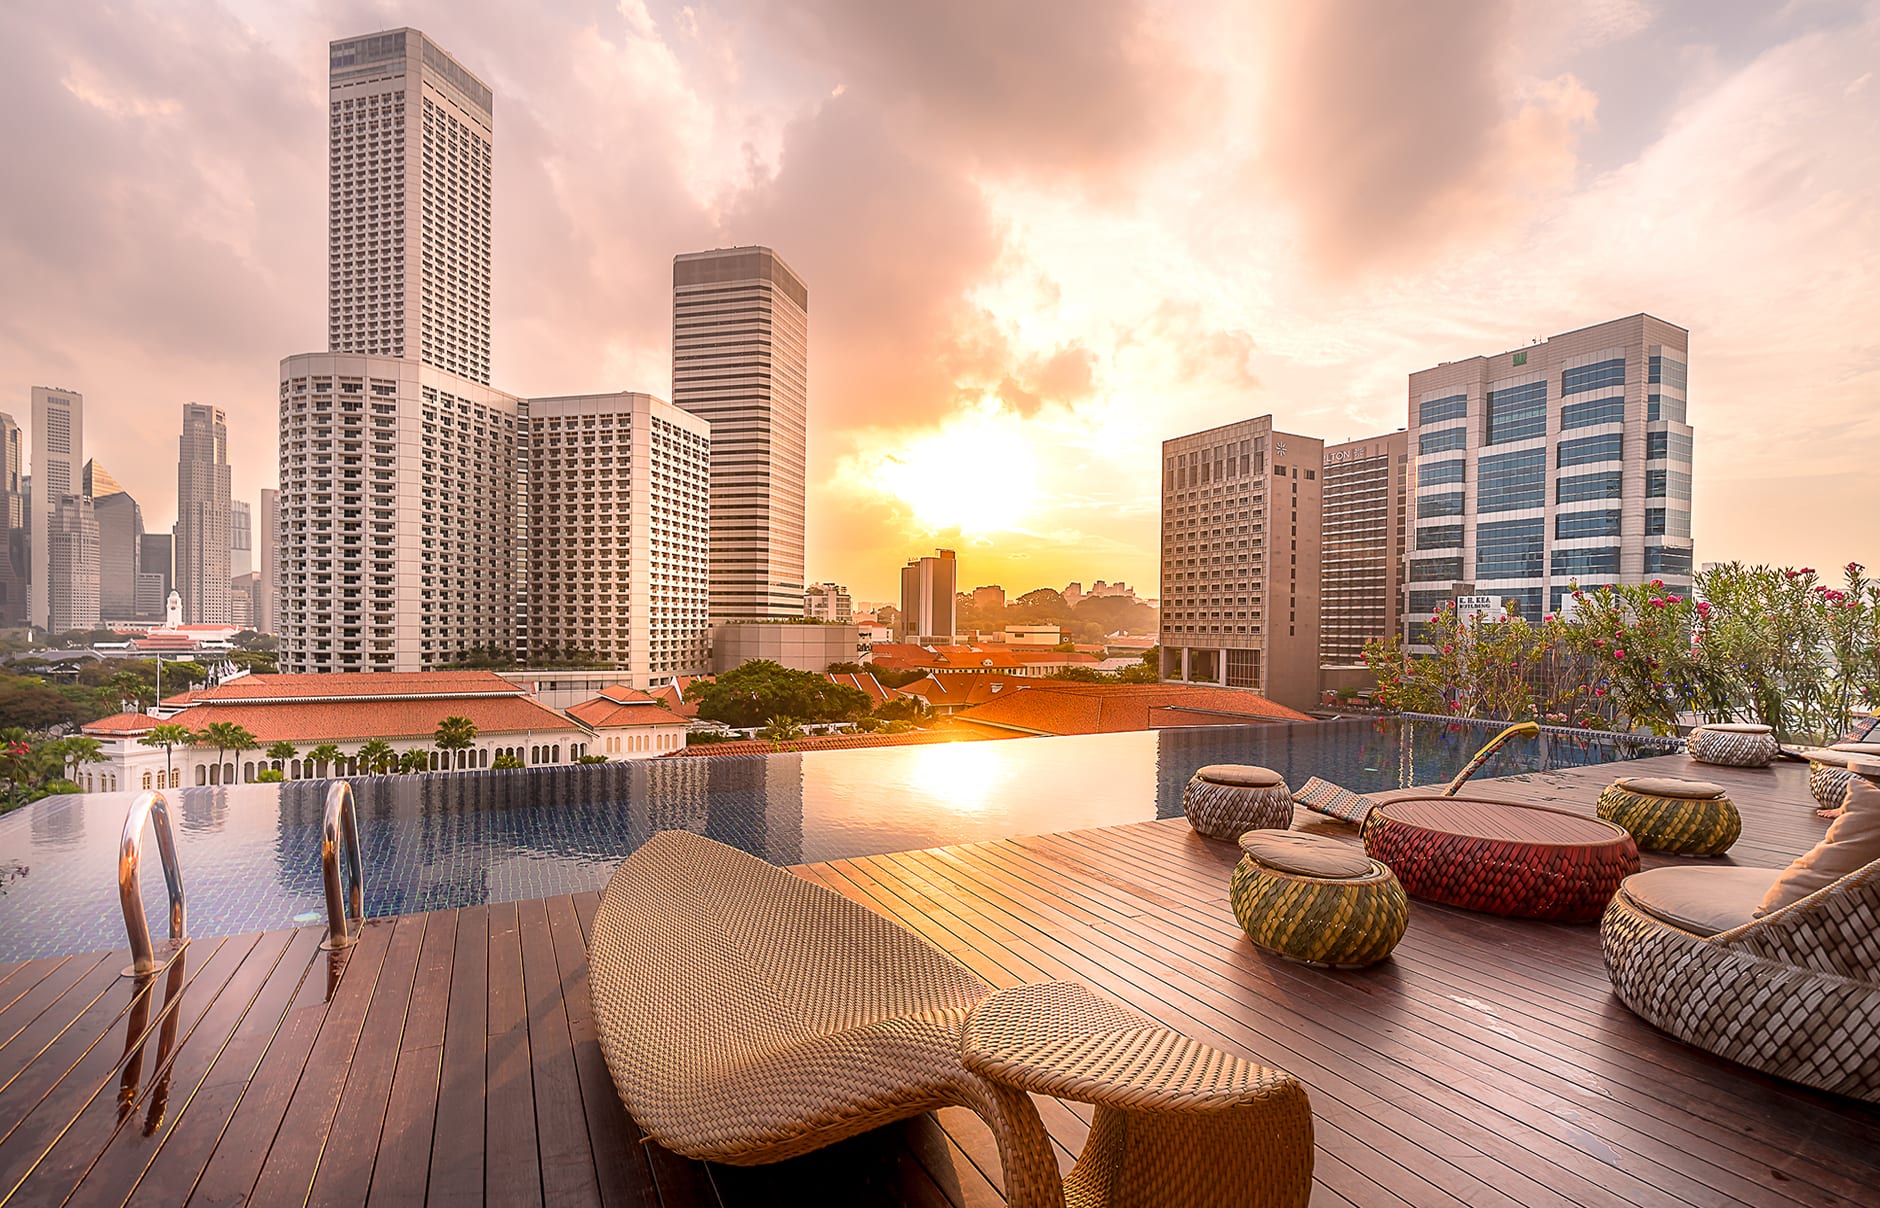 Naumi Hotel, Singapore, Singapore. Hotel Review by TravelPlusStyle. Photo © Naumi Hotels